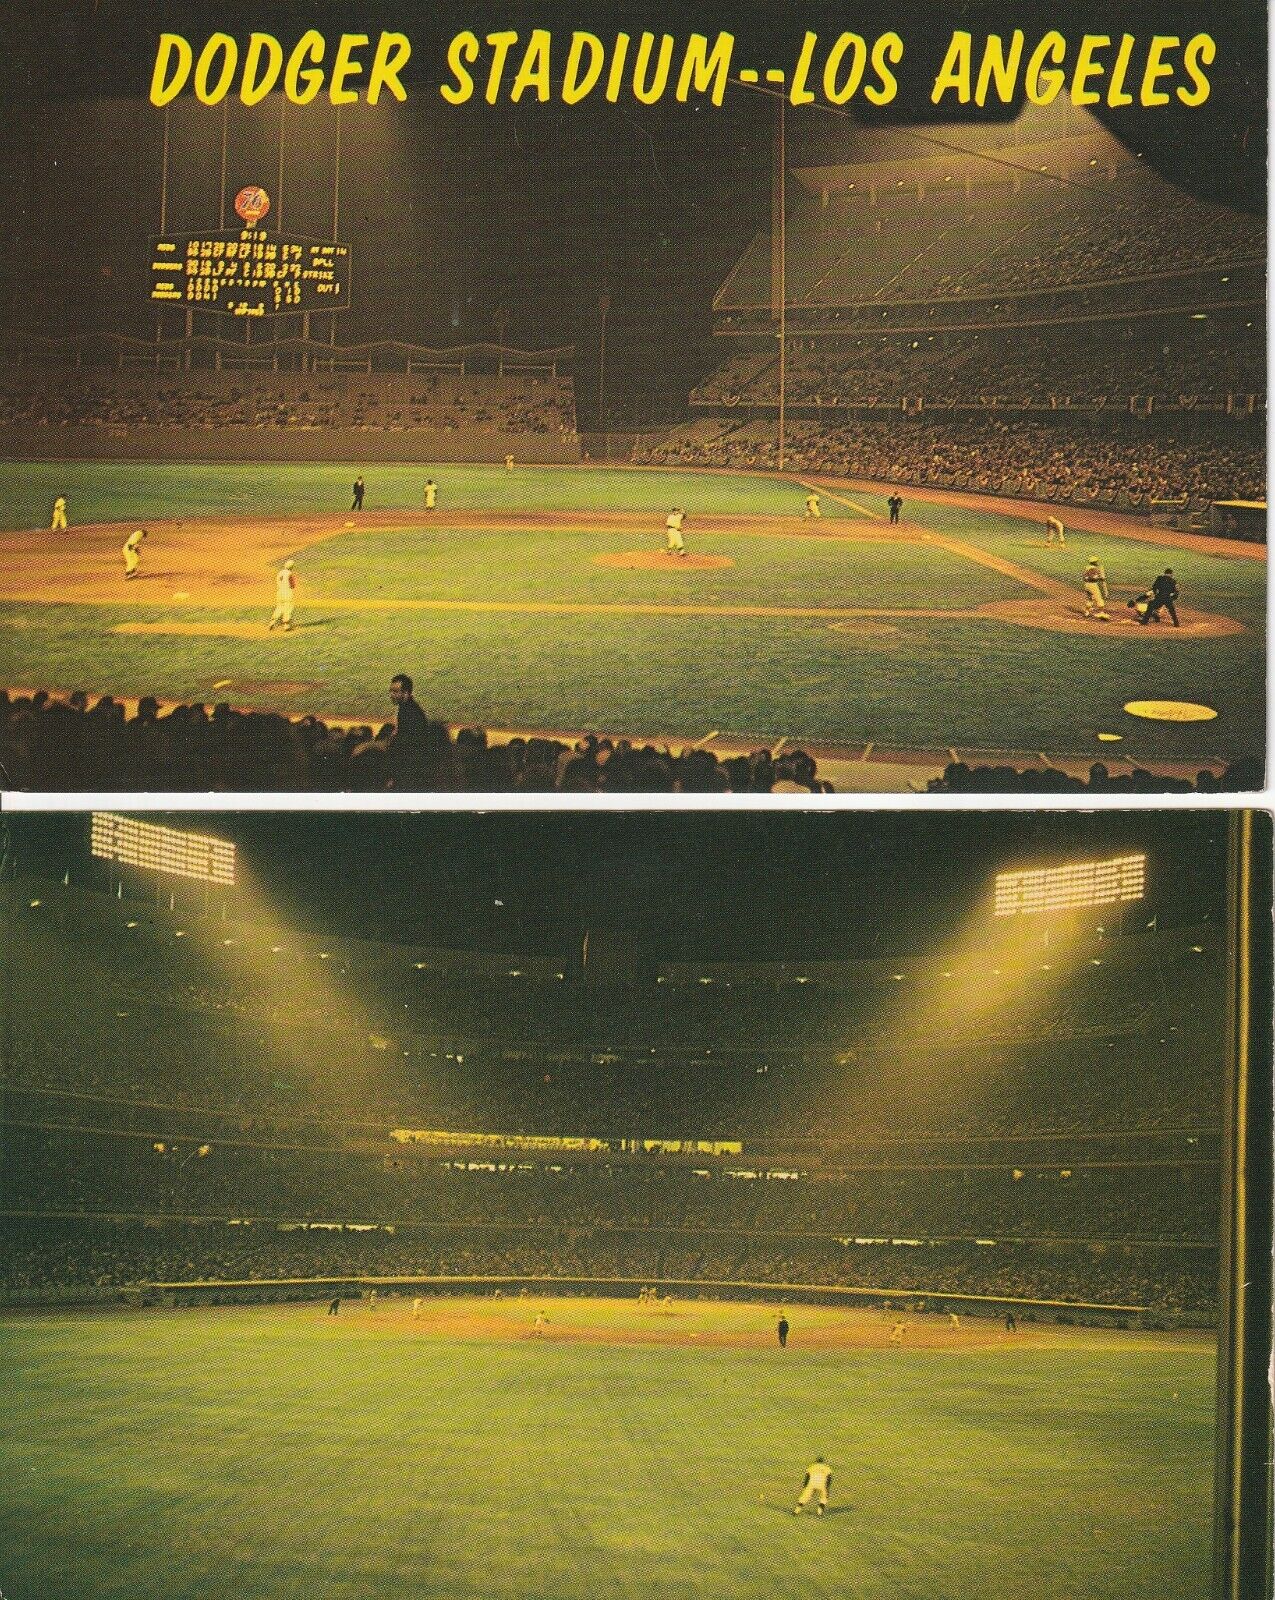 (2) Los Angeles Dodgers Dodger Stadium Postcards - Scarce Interior Views